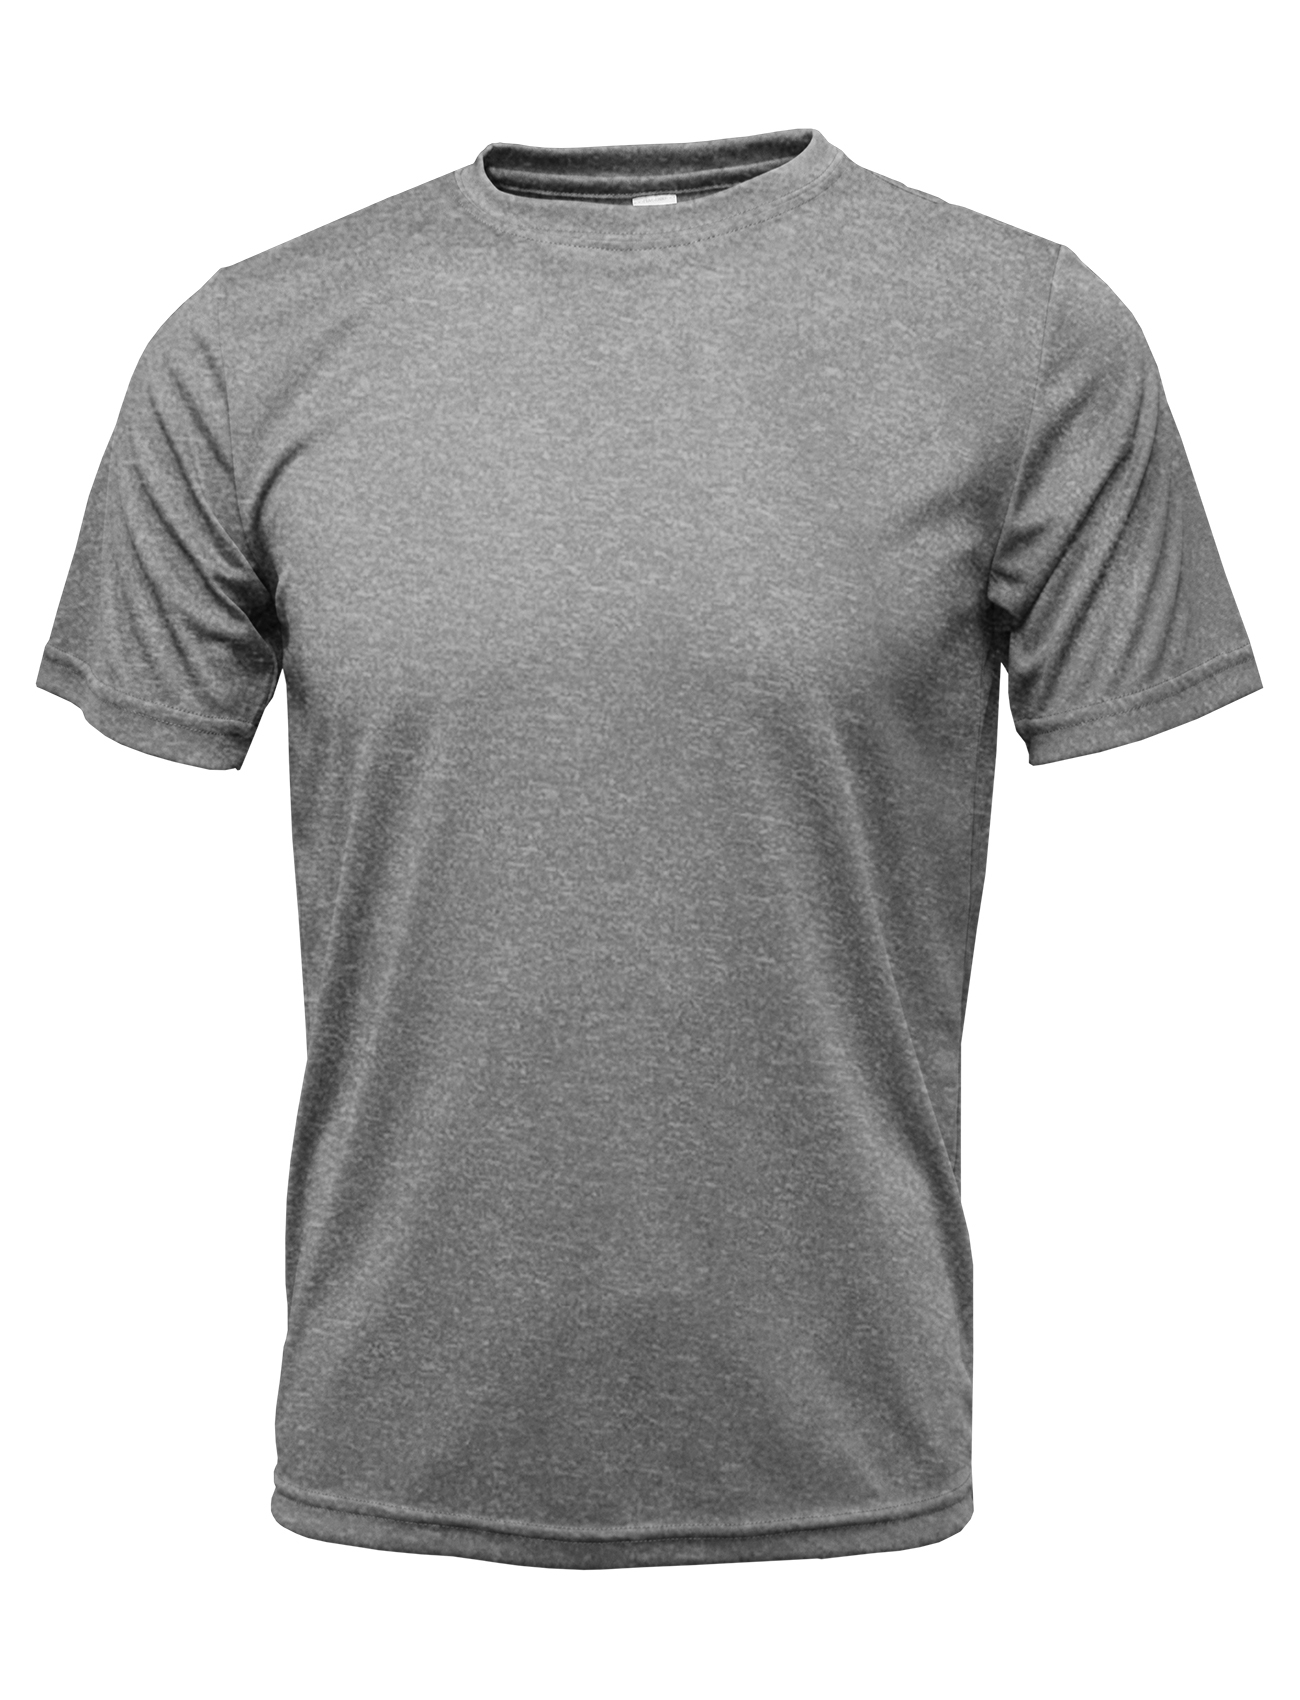 BAW Athletic Wear XT76 / XT76H - Men's Xtreme-Tek T-Shirt $6.50 - T-Shirts